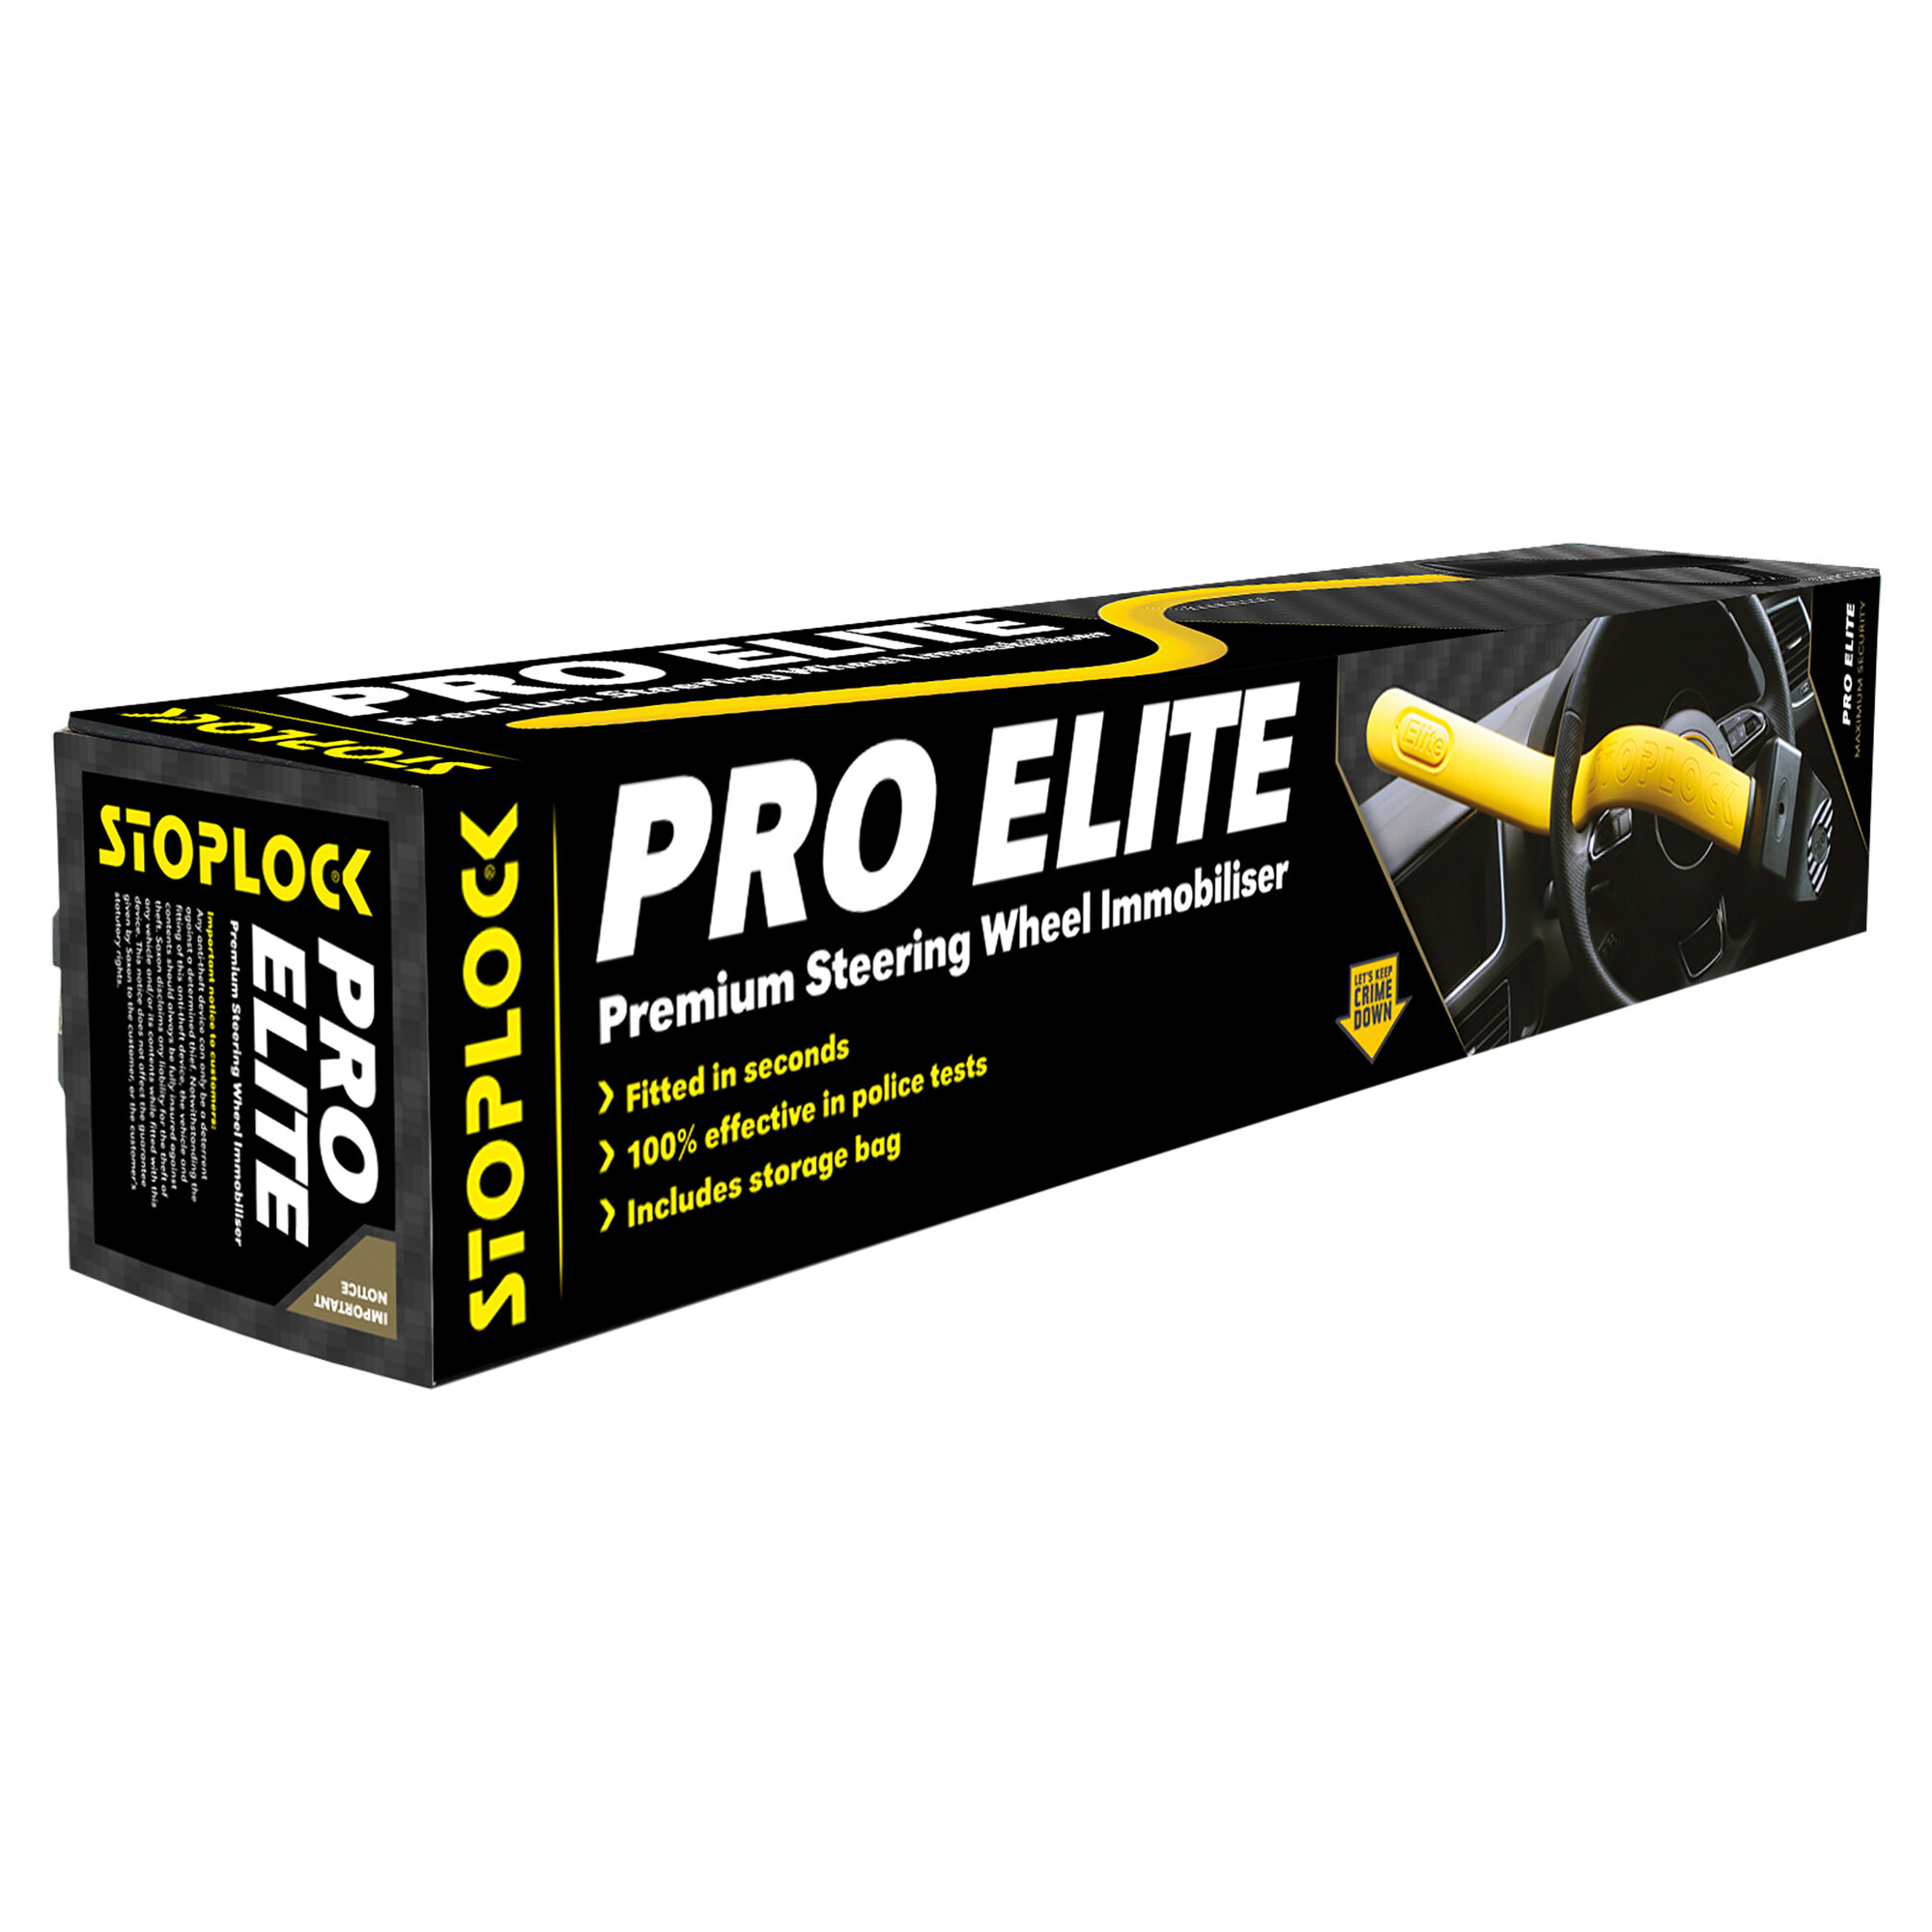 HG150-00-Pro_Elite-Packaging-2019-2000px.jpg